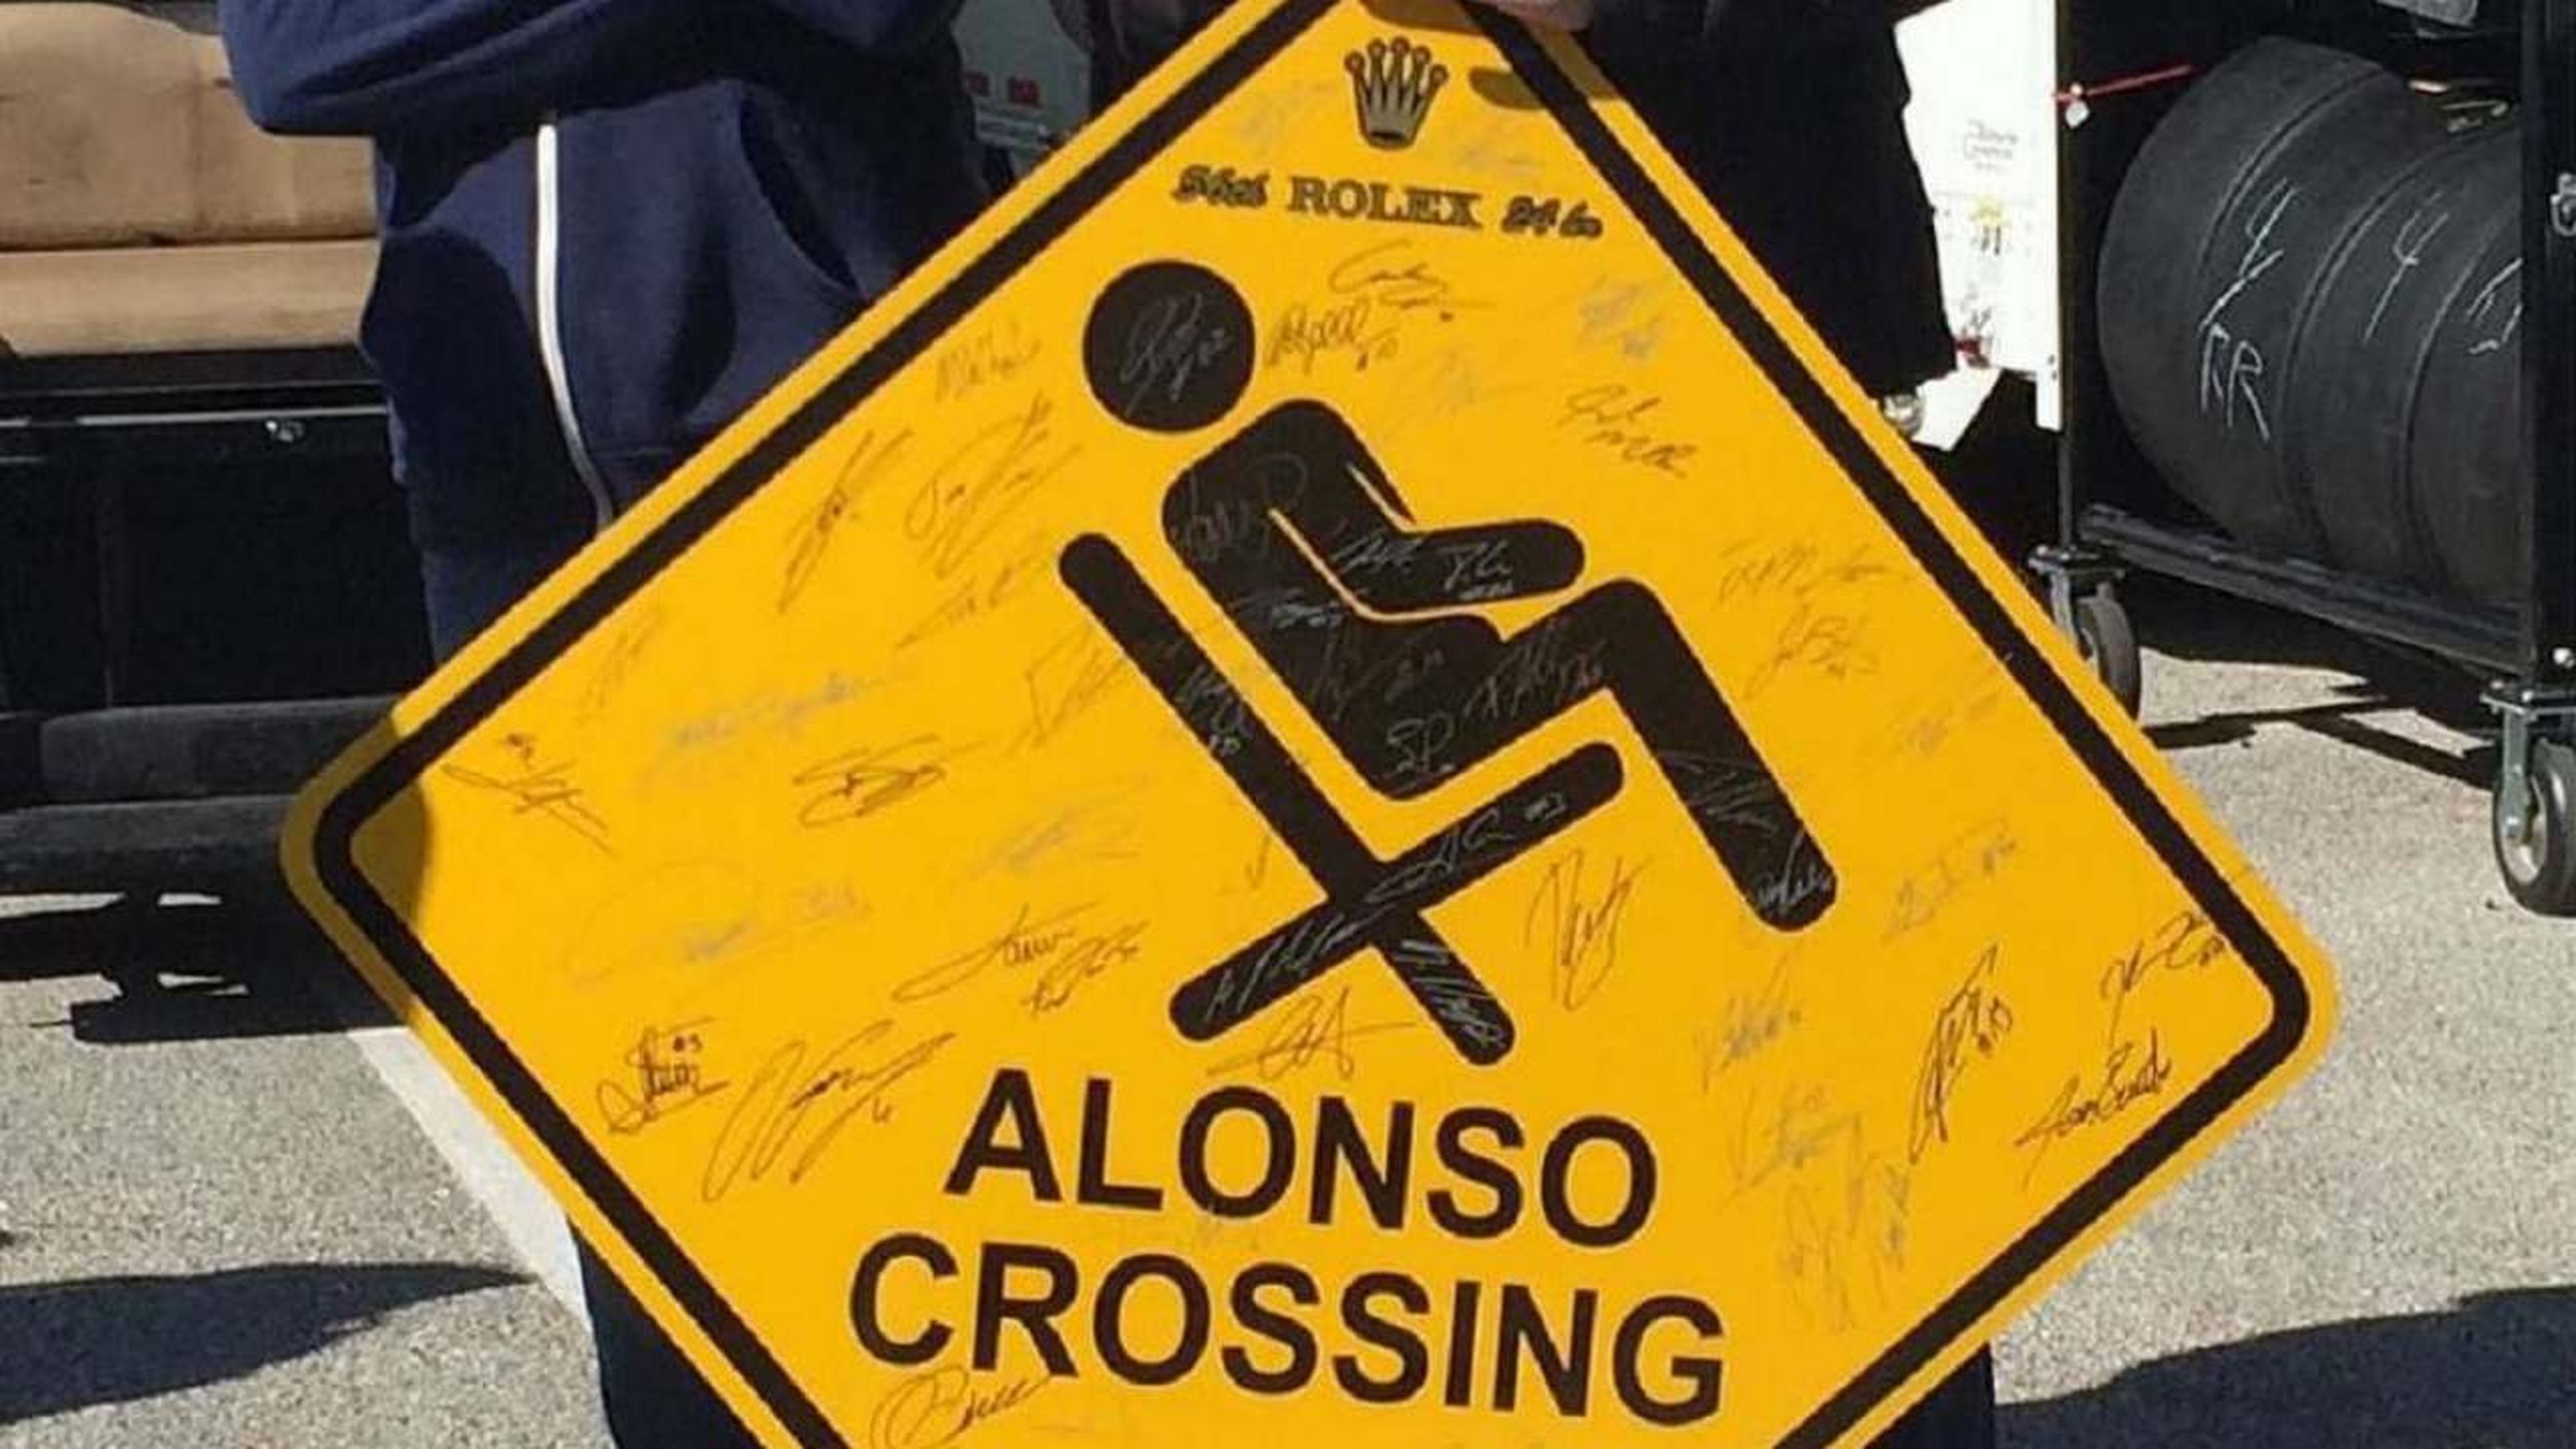 Alonso crossing (Daytona)